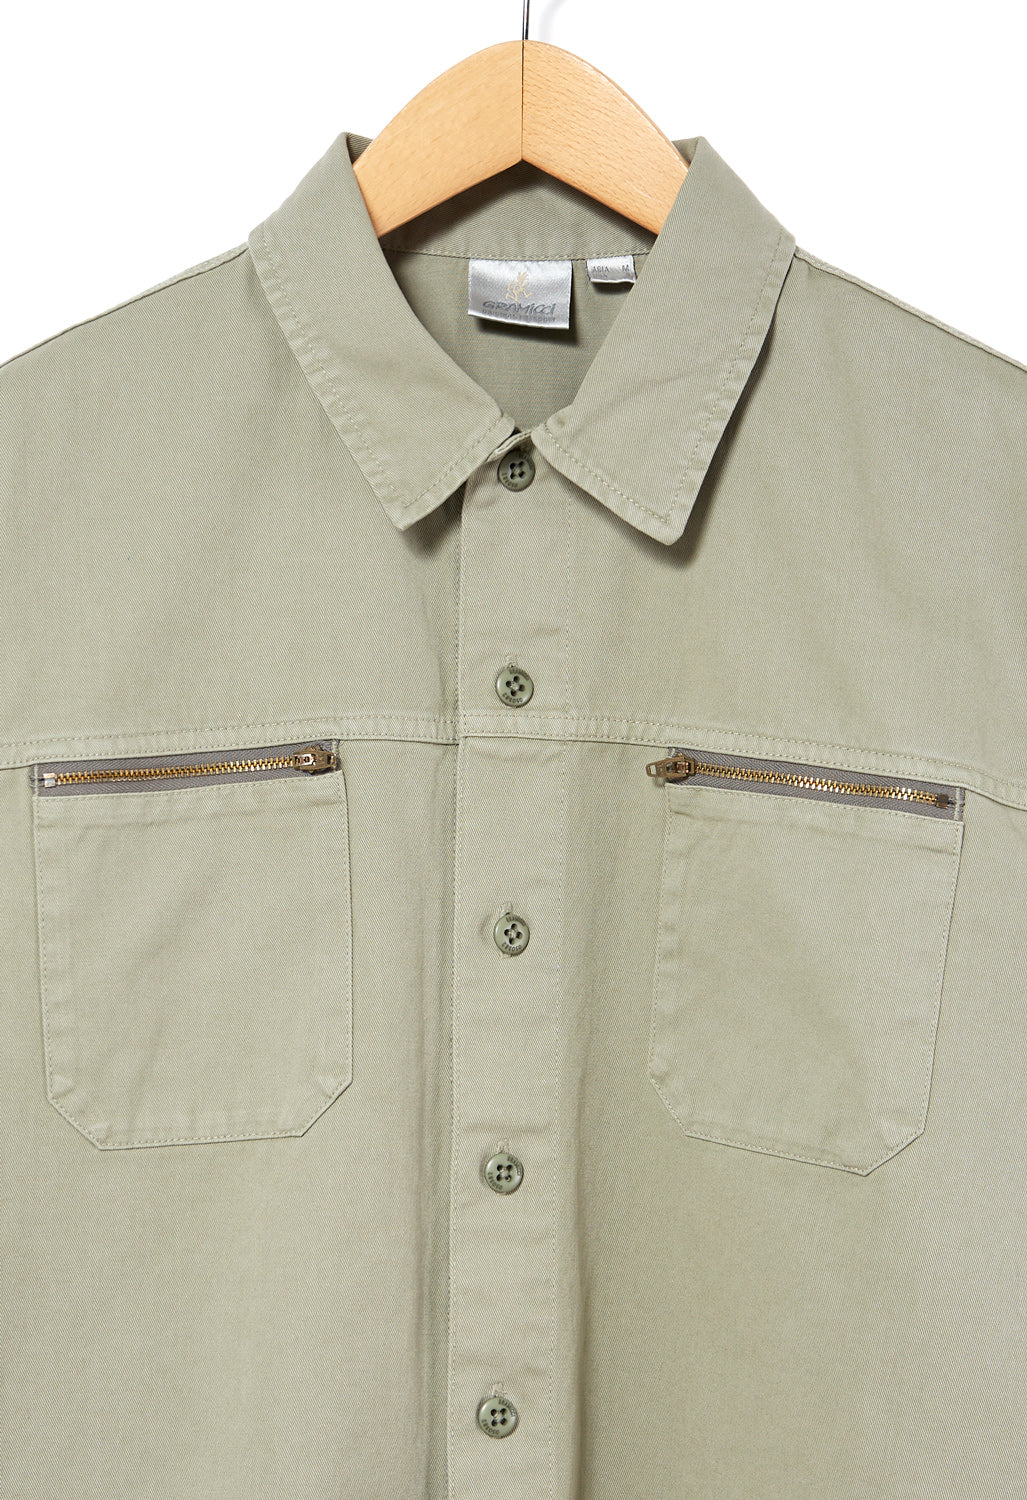 Gramicci x Adsum Men's Cotton Twill Work Shirt - Dry Sage